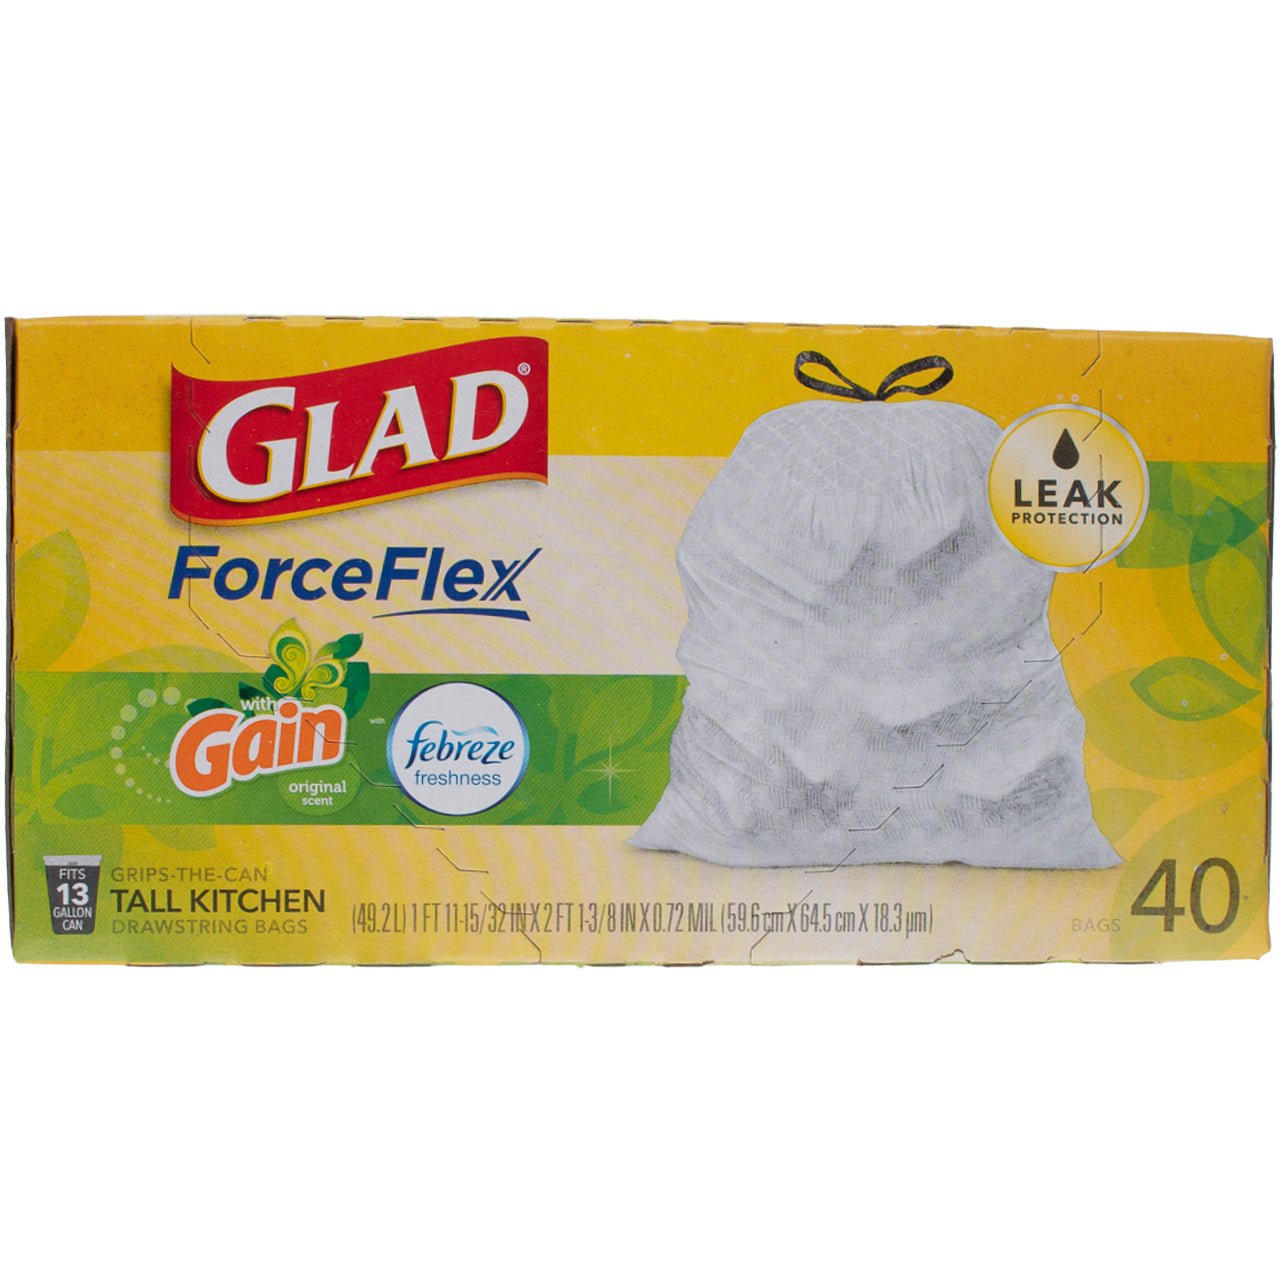 Glad ForceFlex Trash Bags with Gain Original Scent